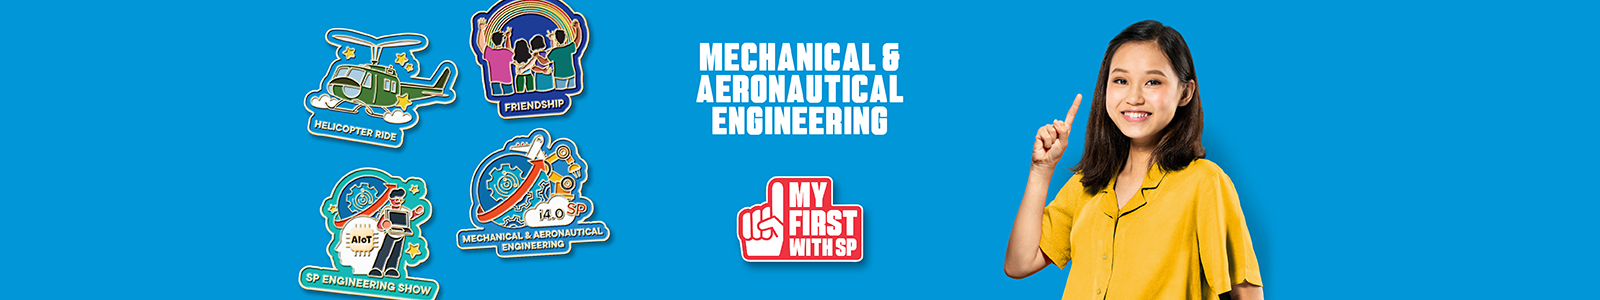 Mechanical and Aeronautical Engineering Banner